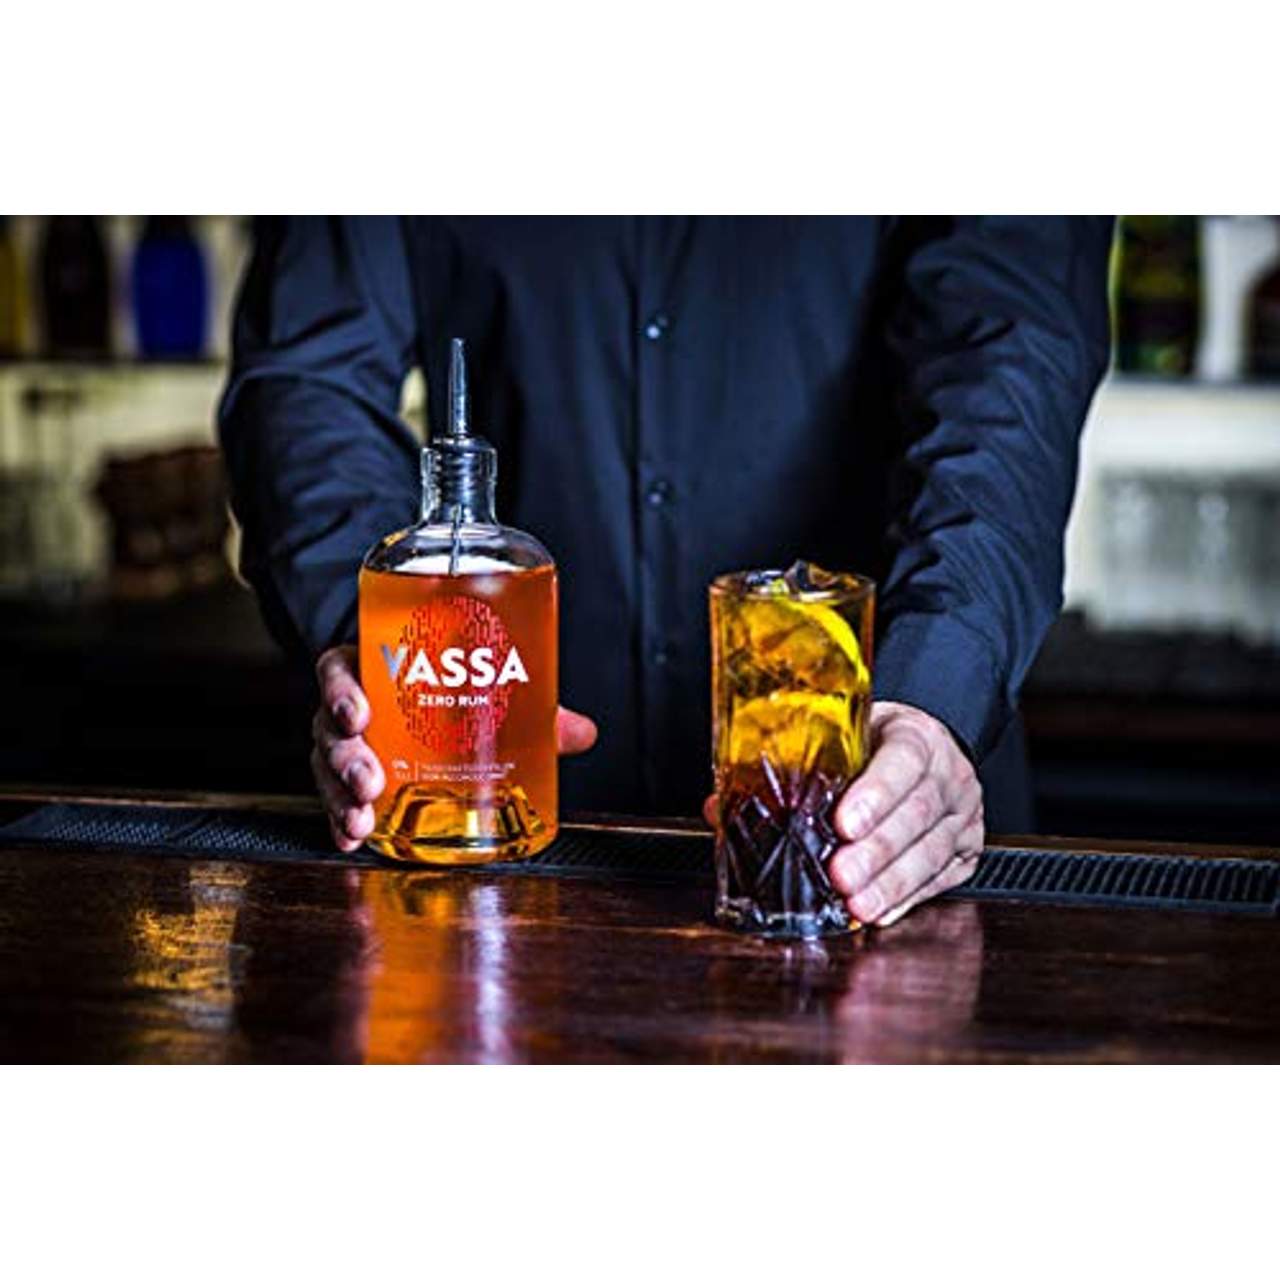 VASSA Zero Rum alkoholfrei 700 ml